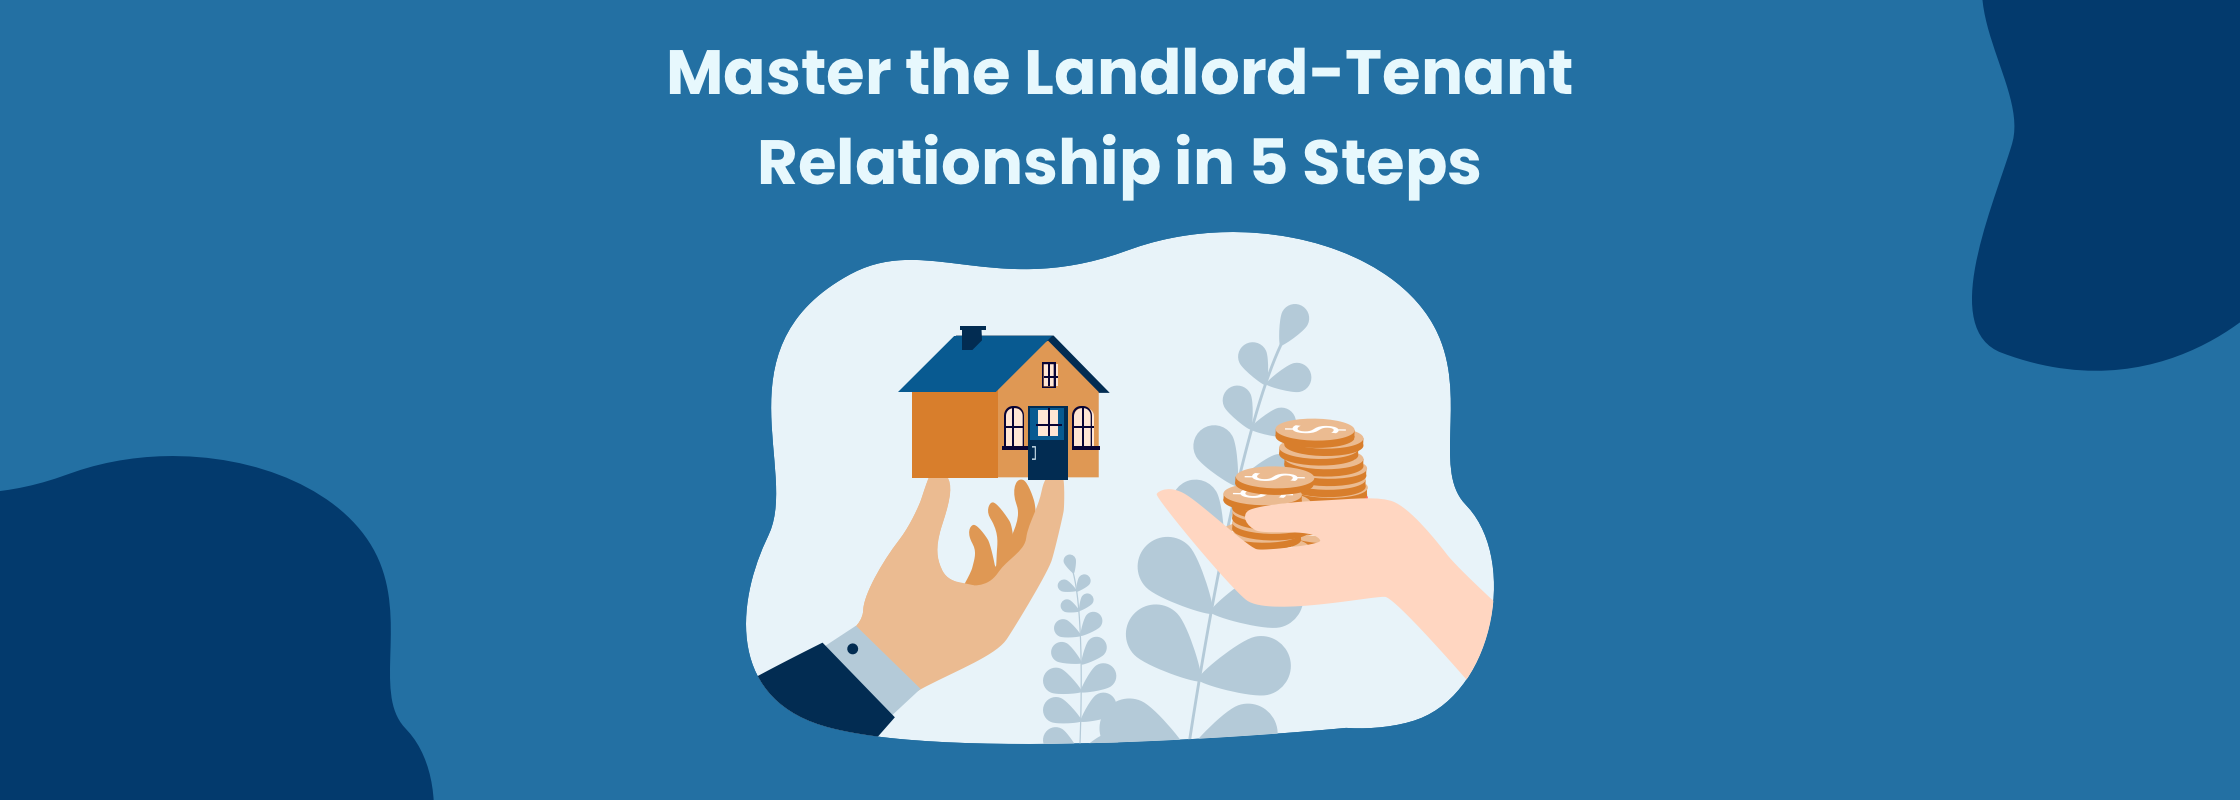 Nurturing a Positive Landlord-Tenant Partnership